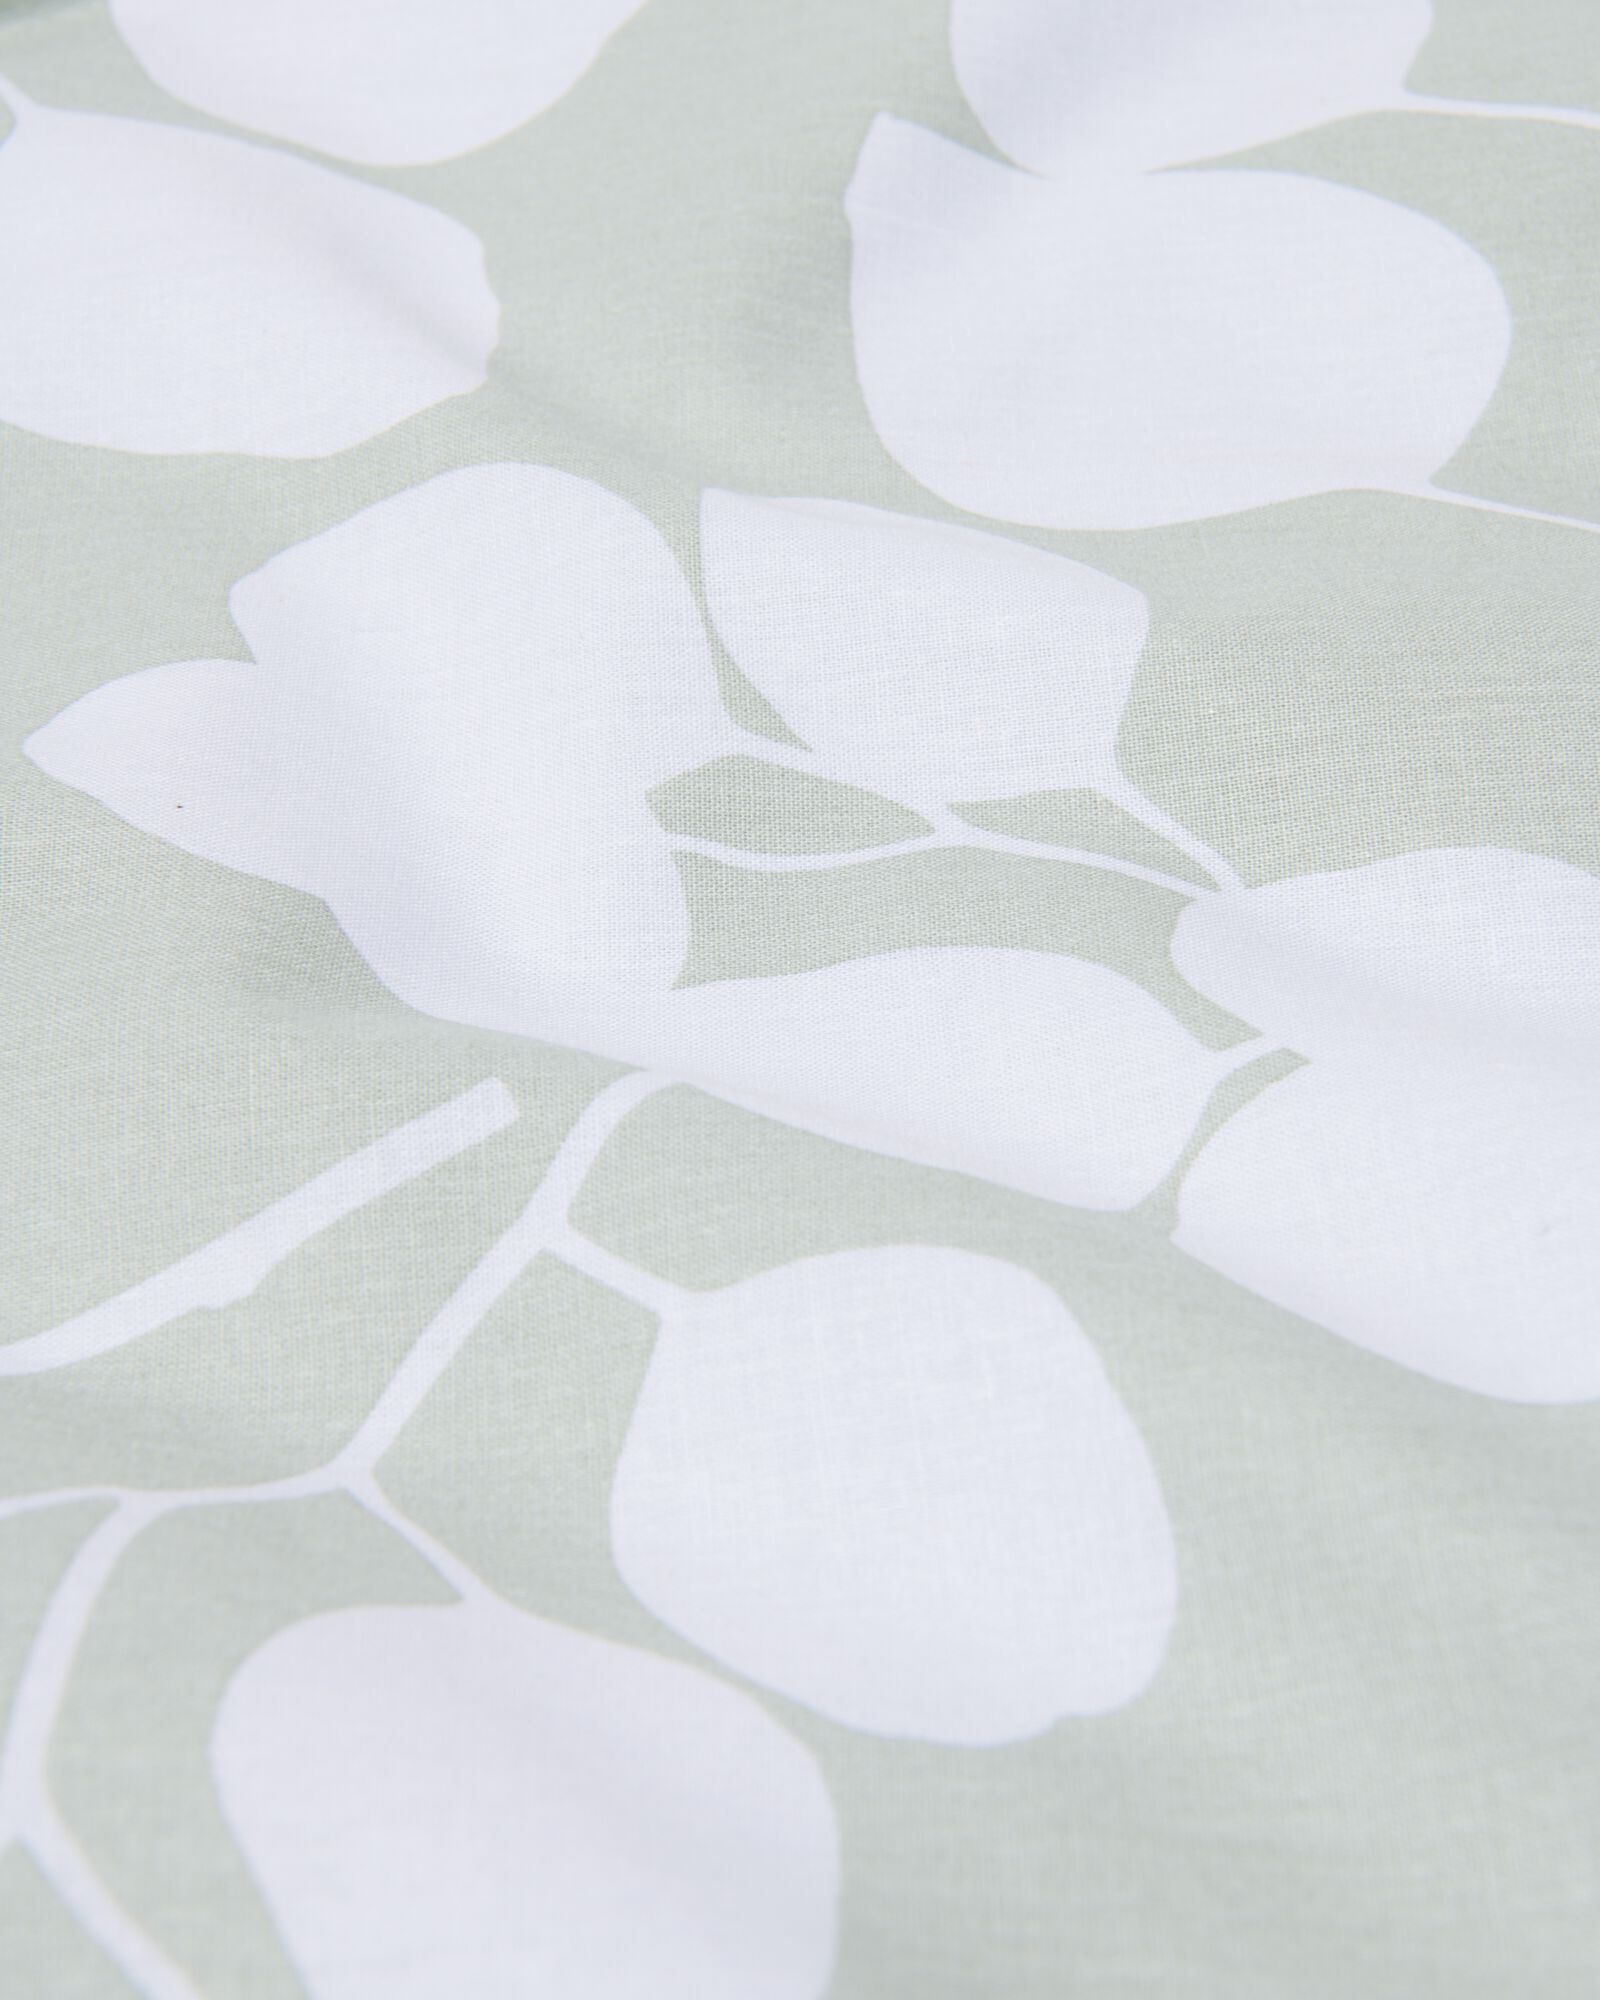 Bettwäsche, Soft Cotton, 200 x 220 cm, Blätter, grün - 5730150 - HEMA